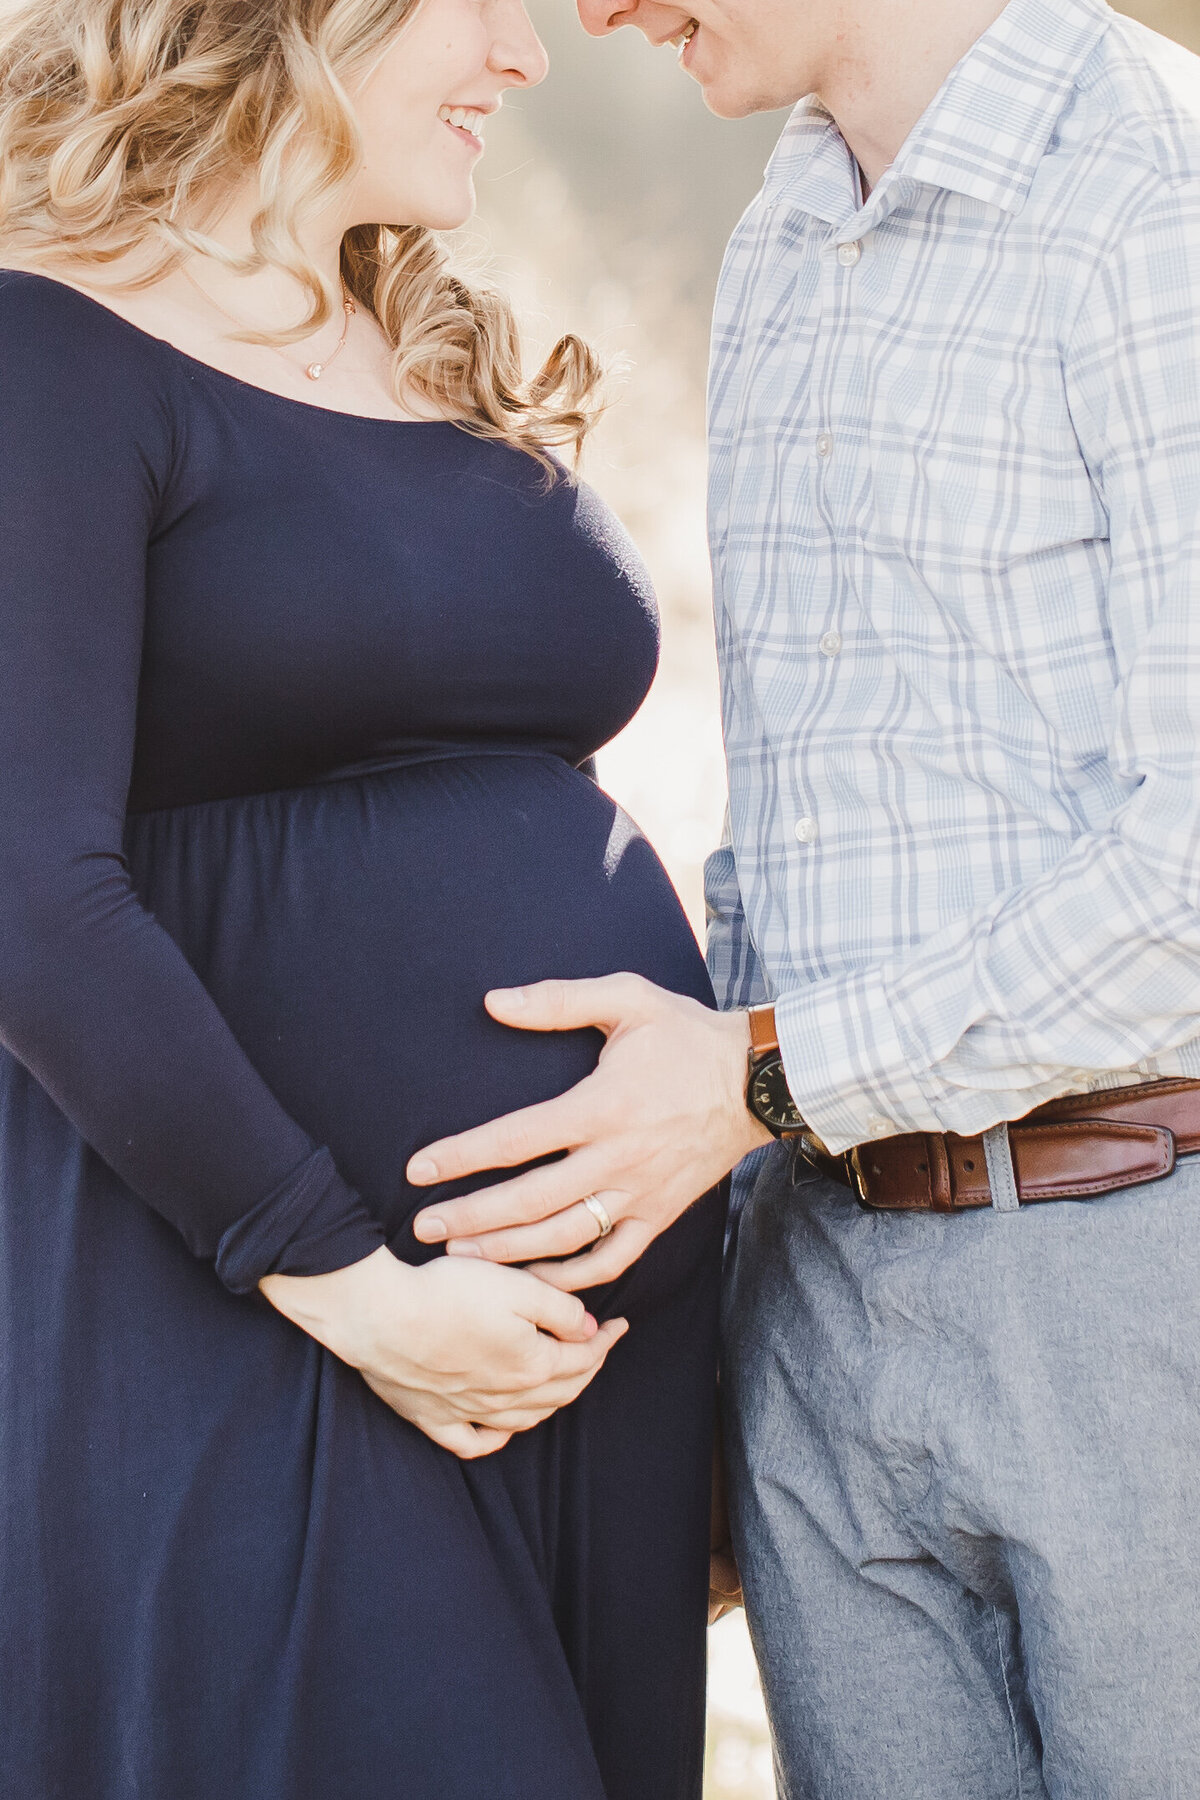 Blake Maternity - Virginia Maternity Photographer - Photography by Amy Nicole-32419-14 copy